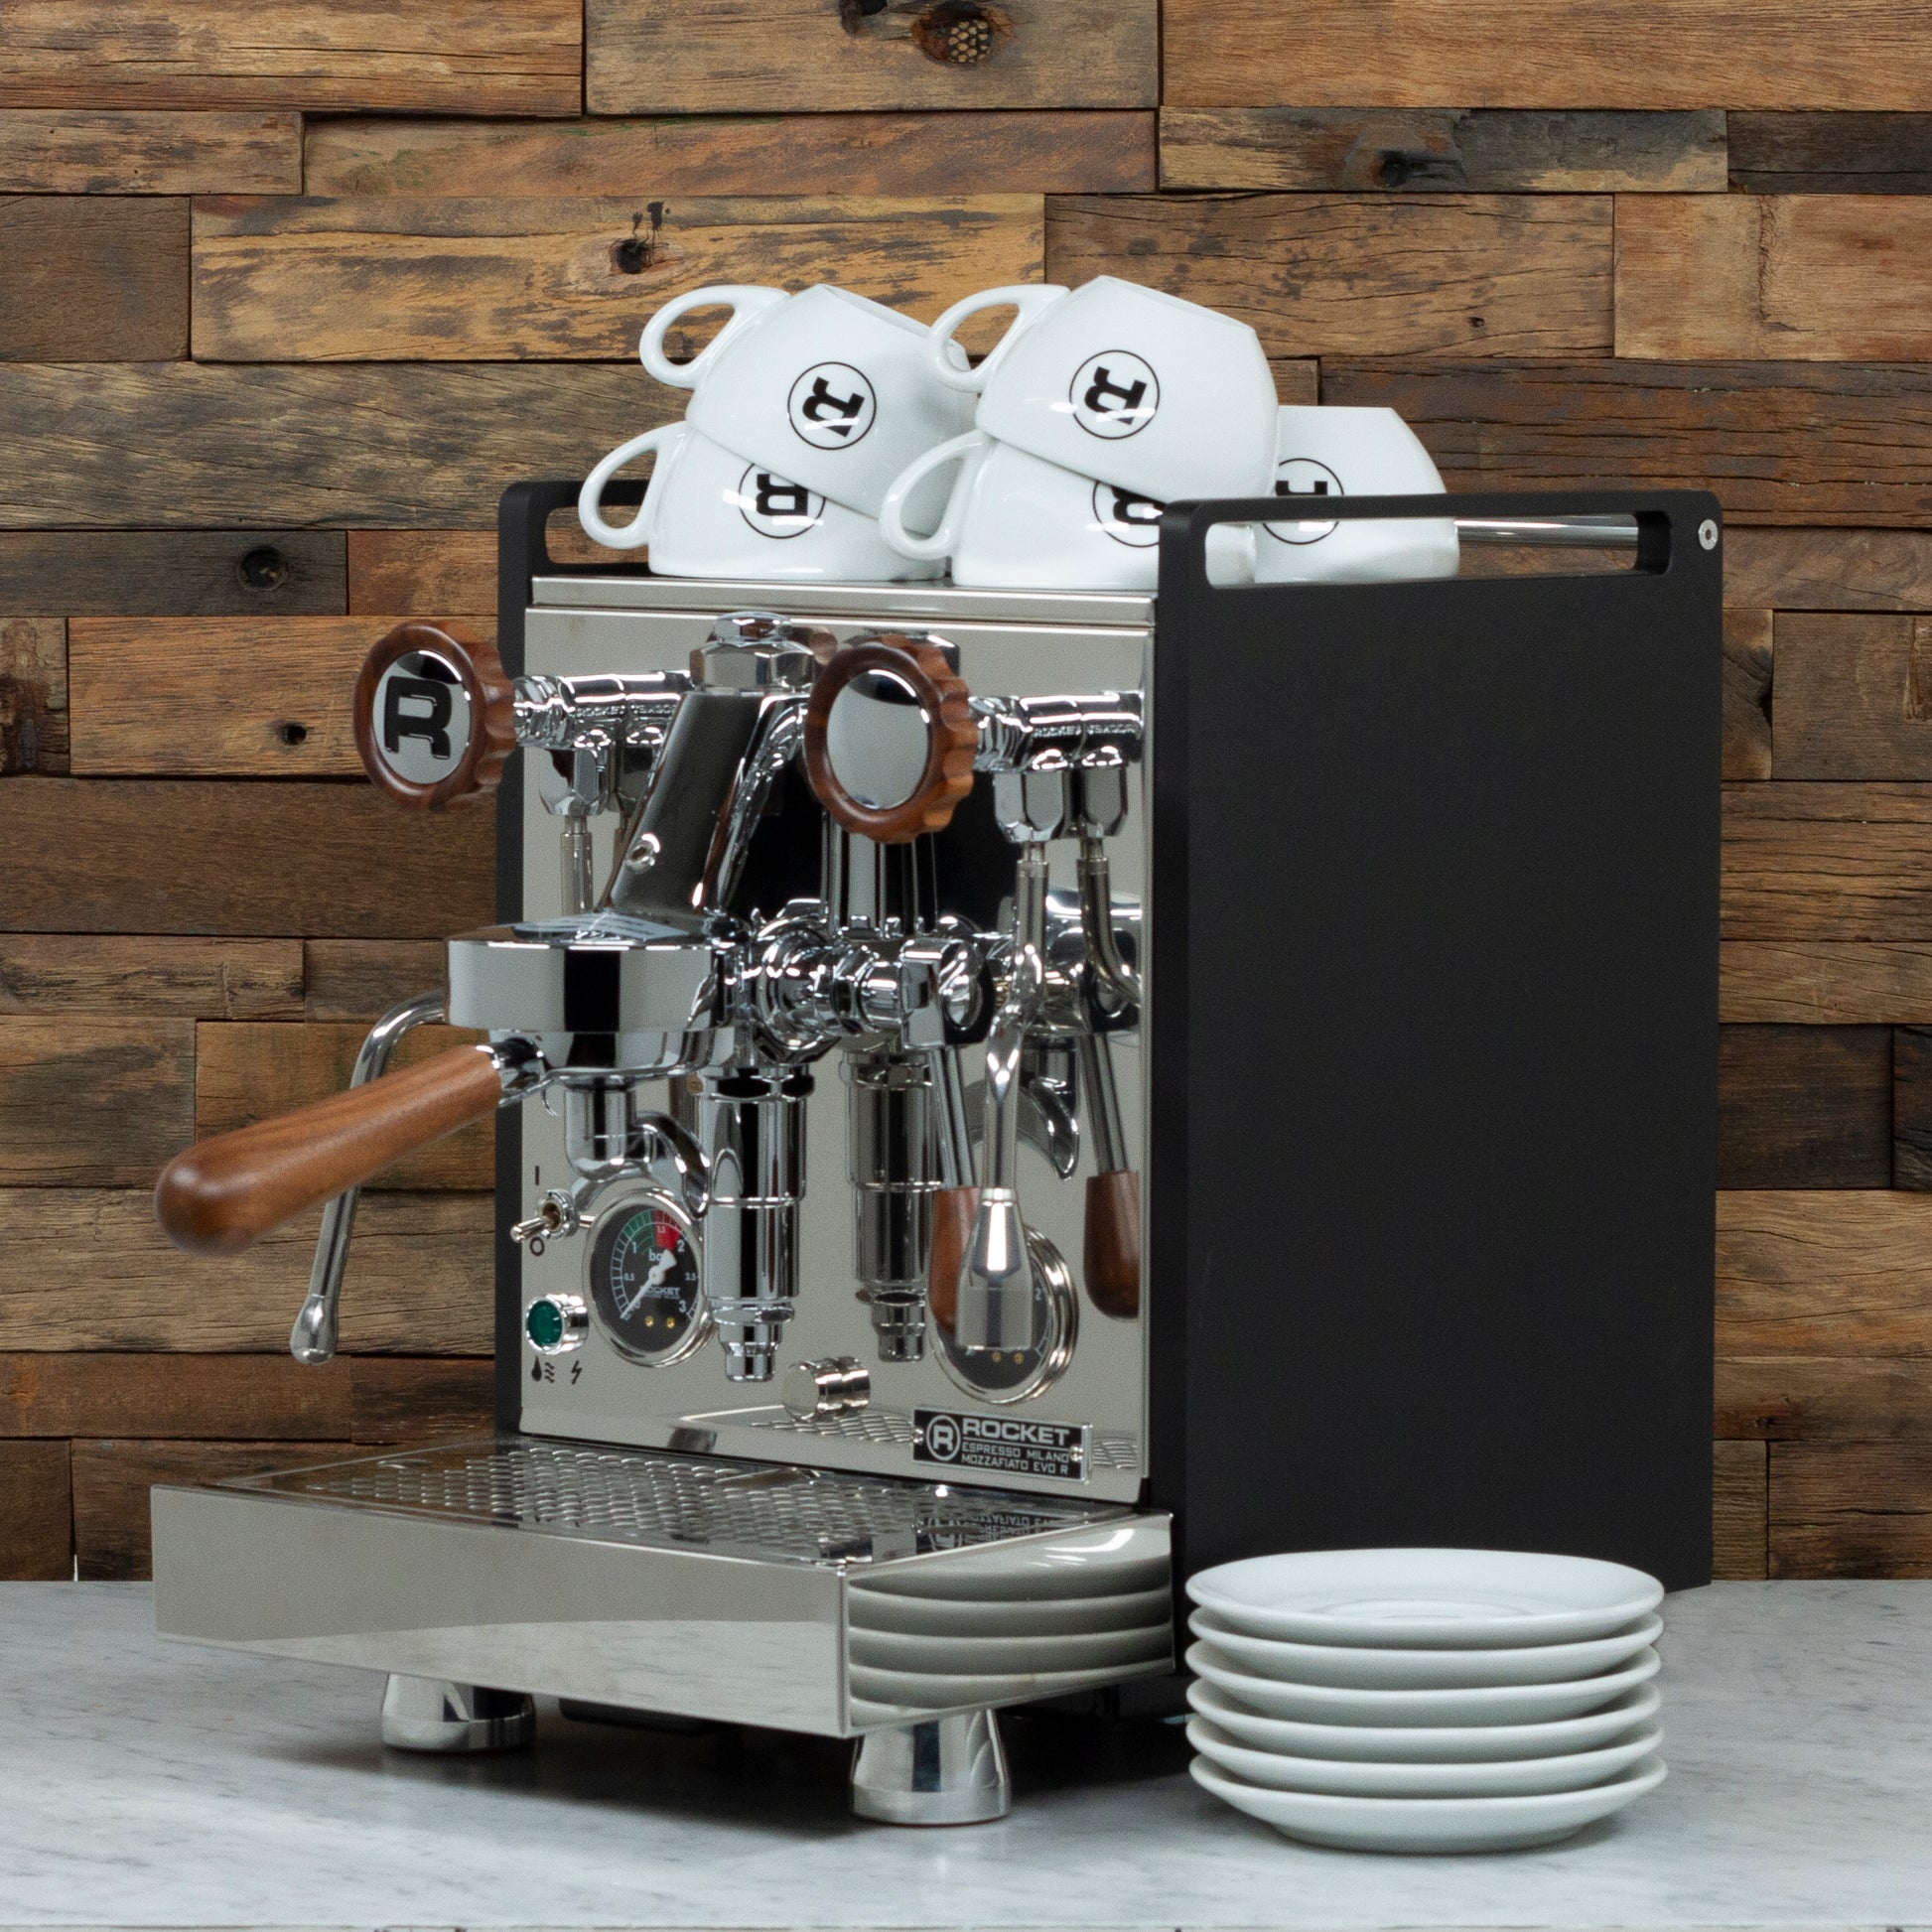 Lavazza Logo Espresso Cup and Saucer Set – Whole Latte Love